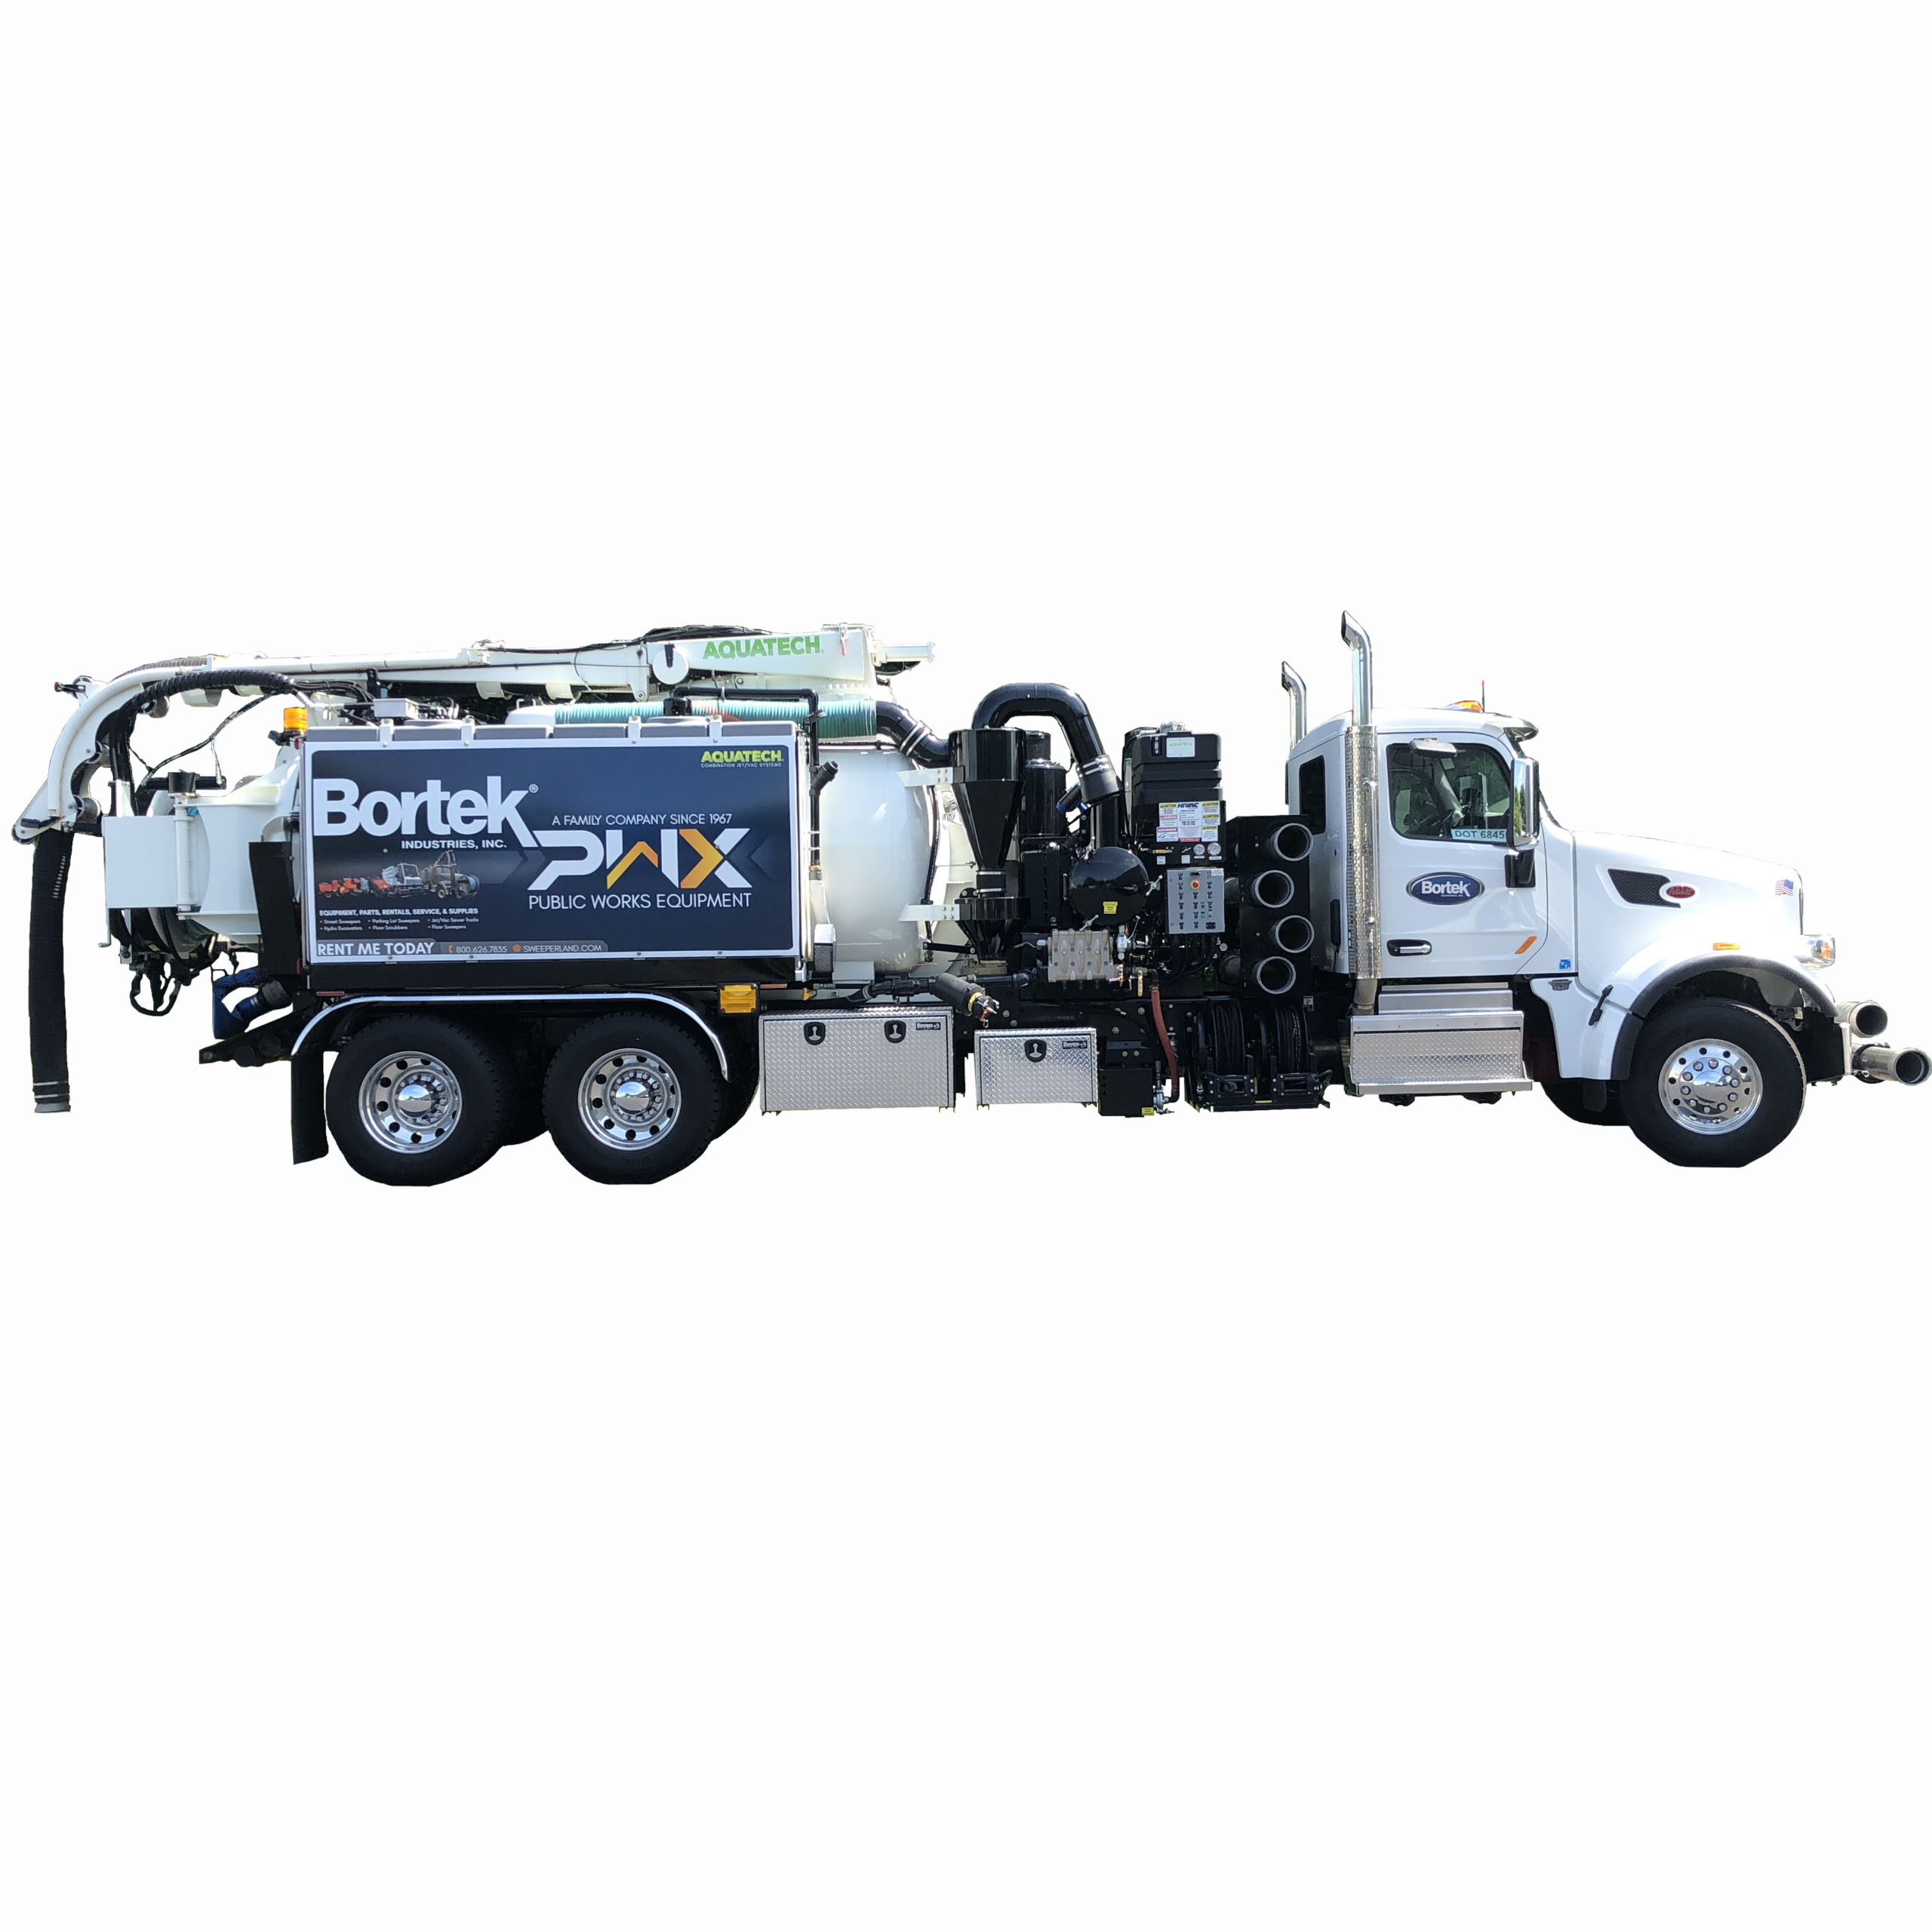 Aquatech® B-Series Jet/Vac Truck - Bortek PWX